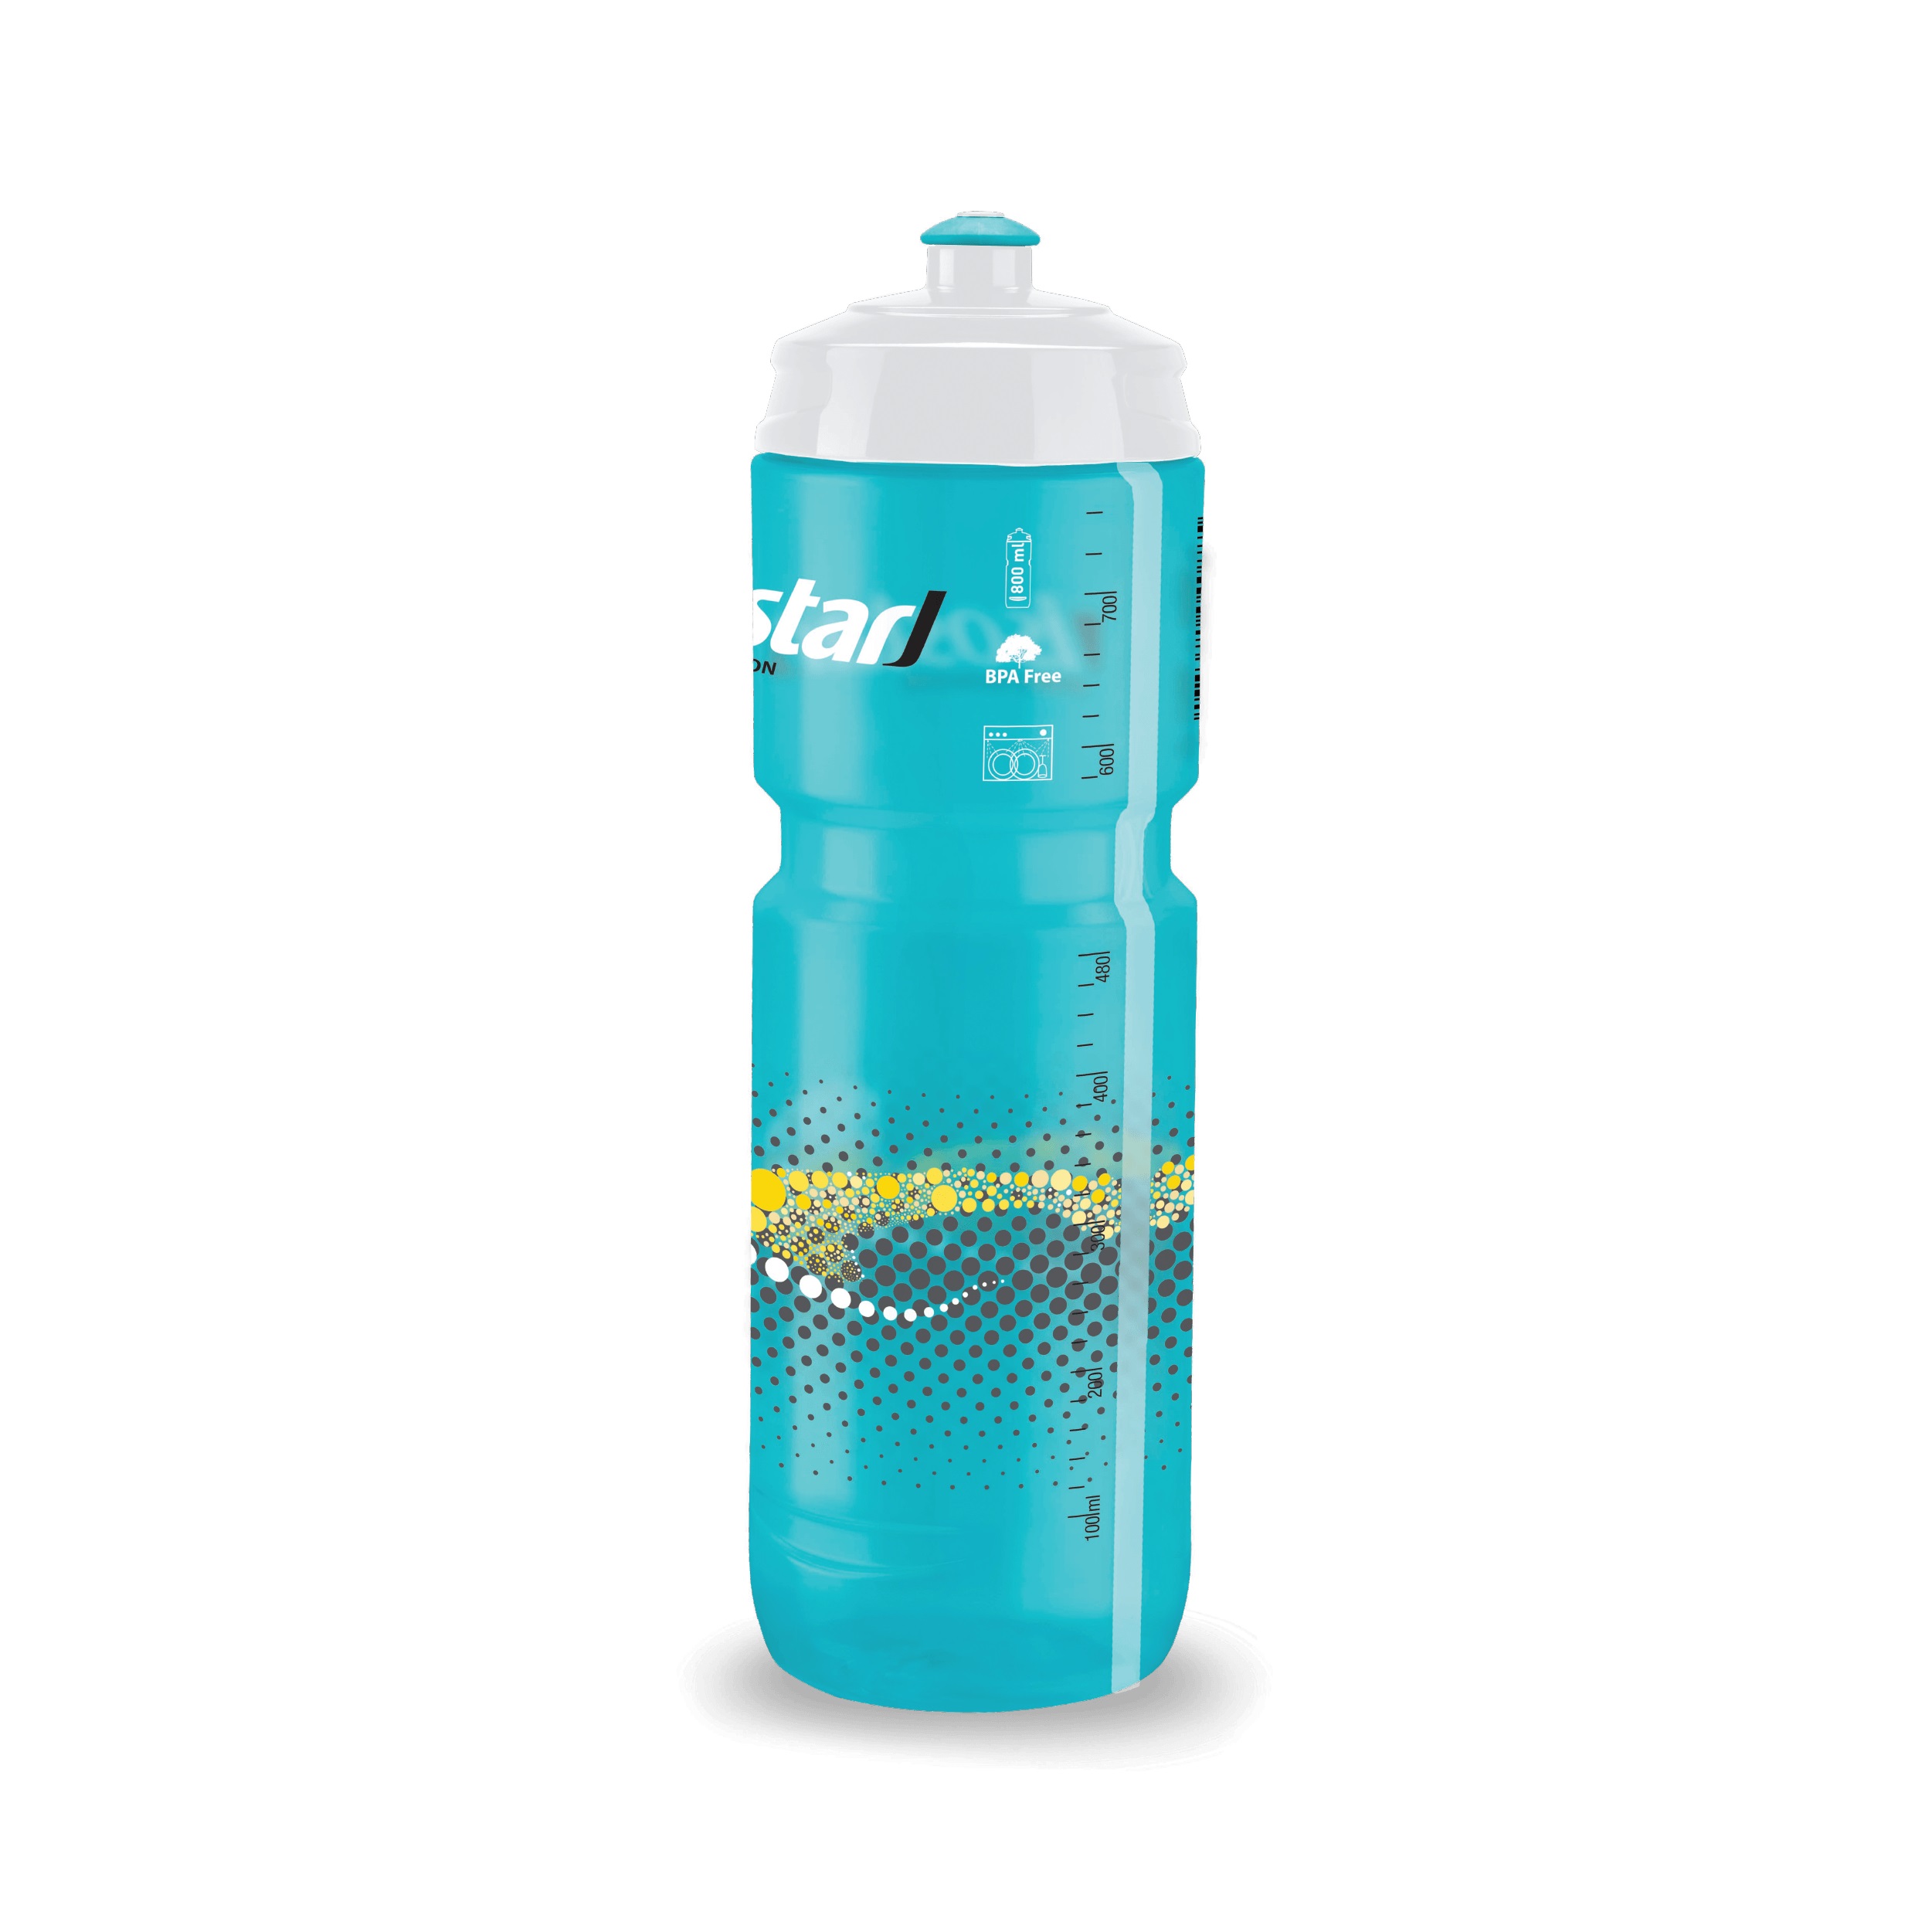 Бутылка для воды Isostar 800